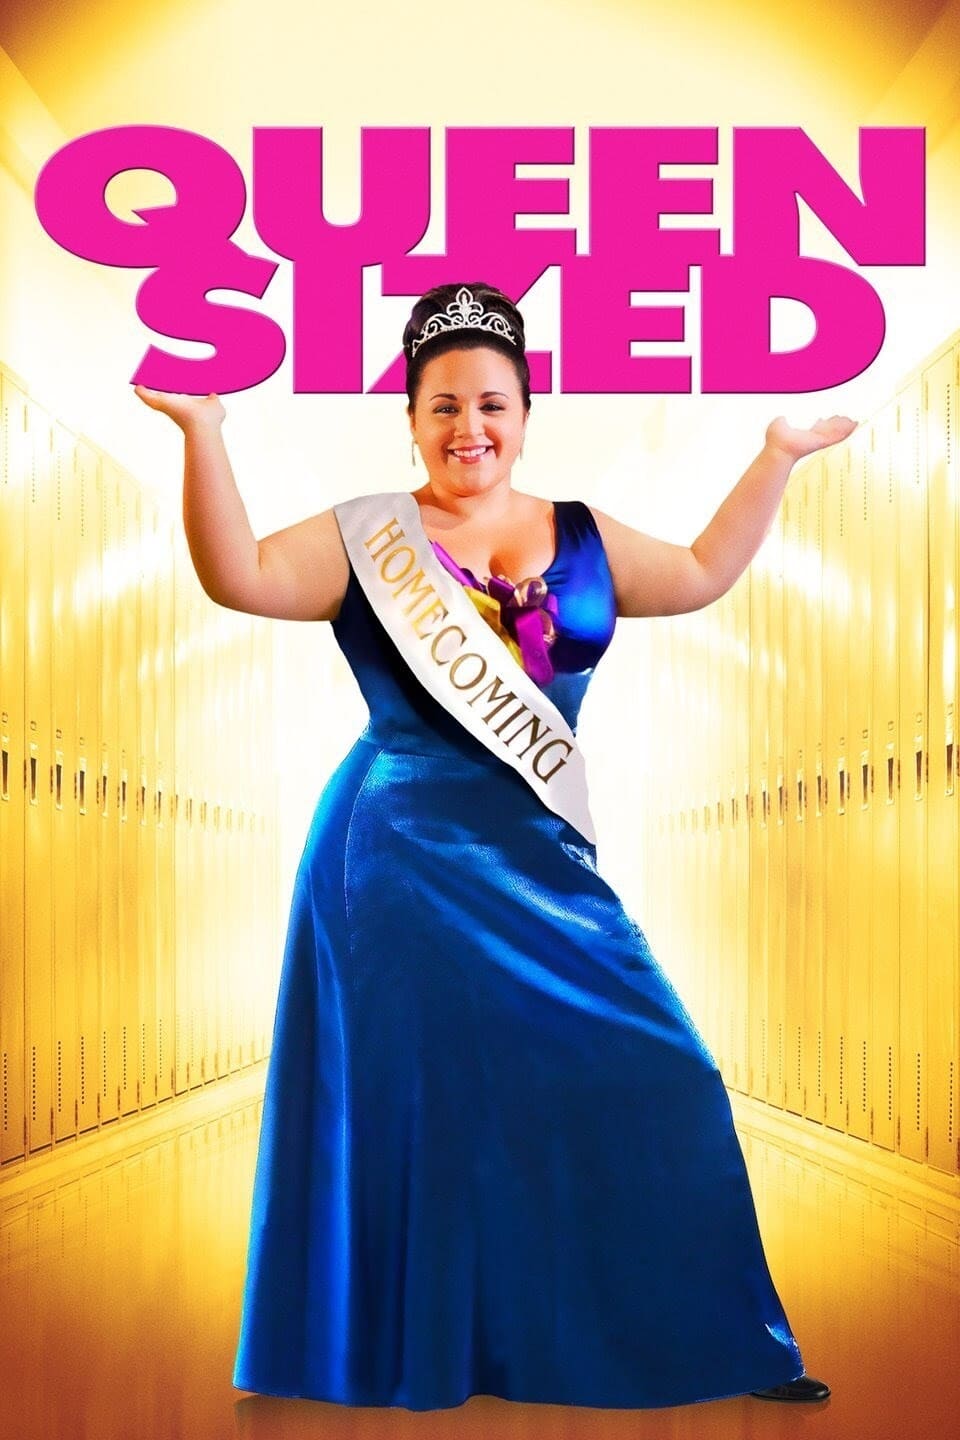 Queen Sized (2008)